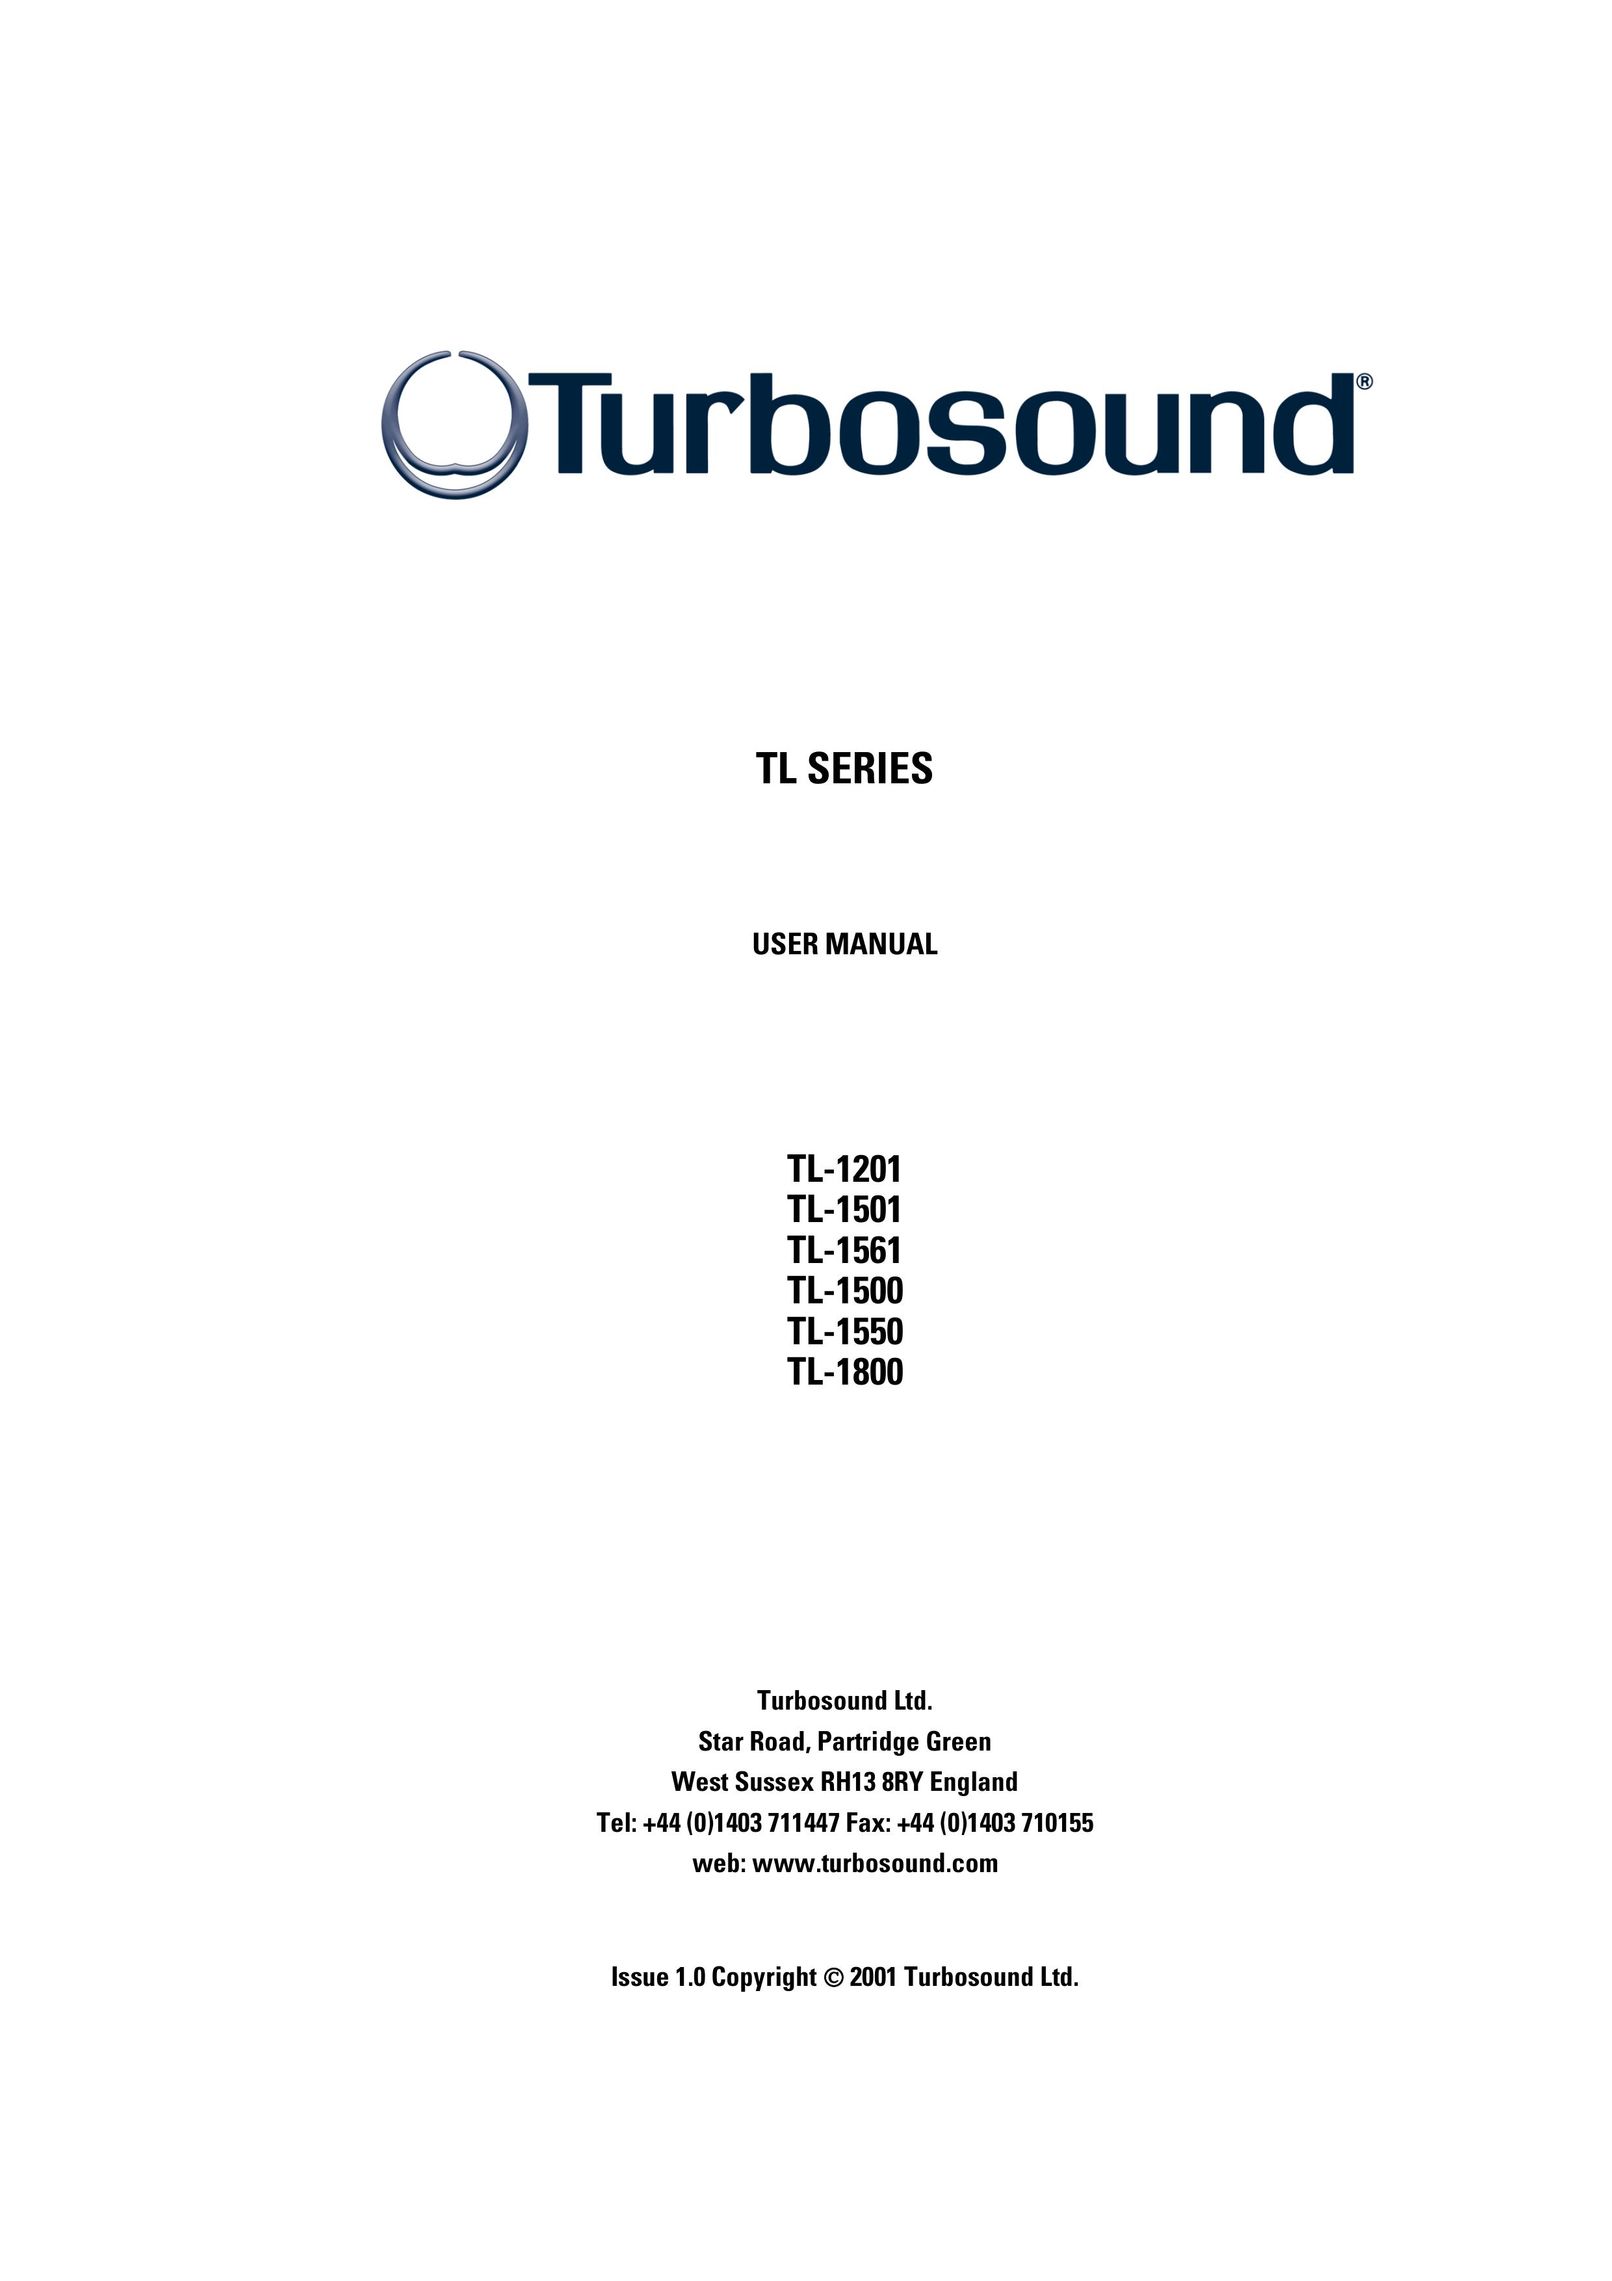 Turbosound TL-1500 Portable Speaker User Manual